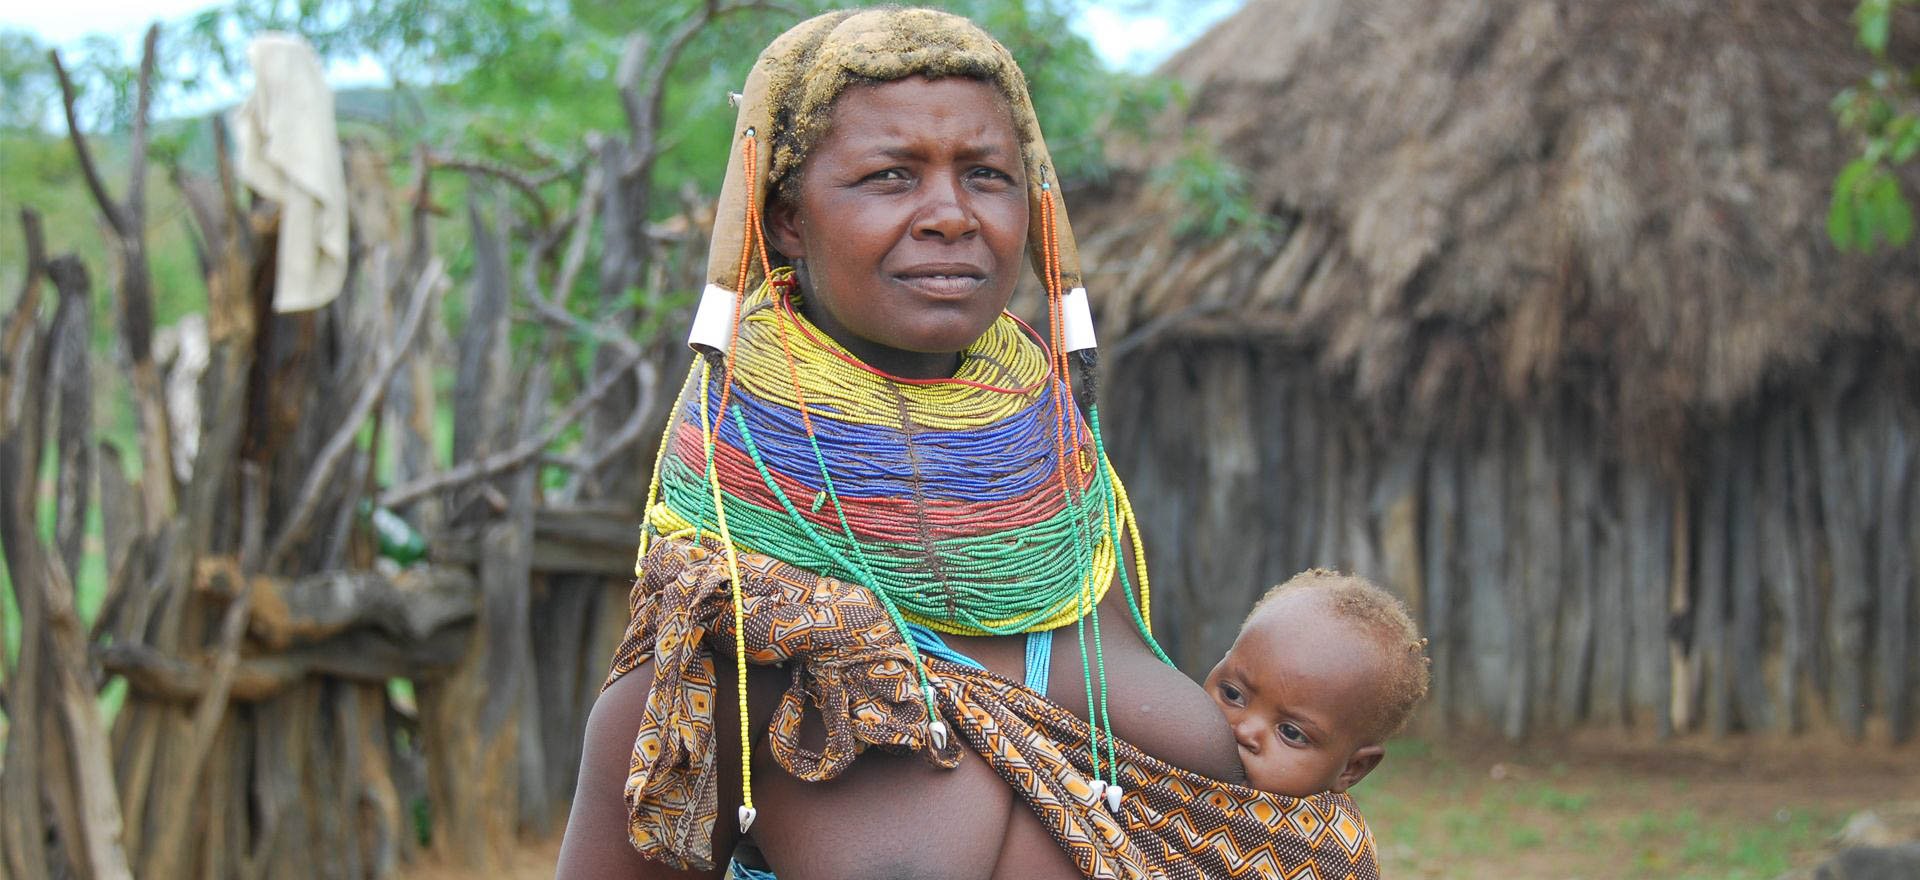 Angola holidays - Muila woman with baby